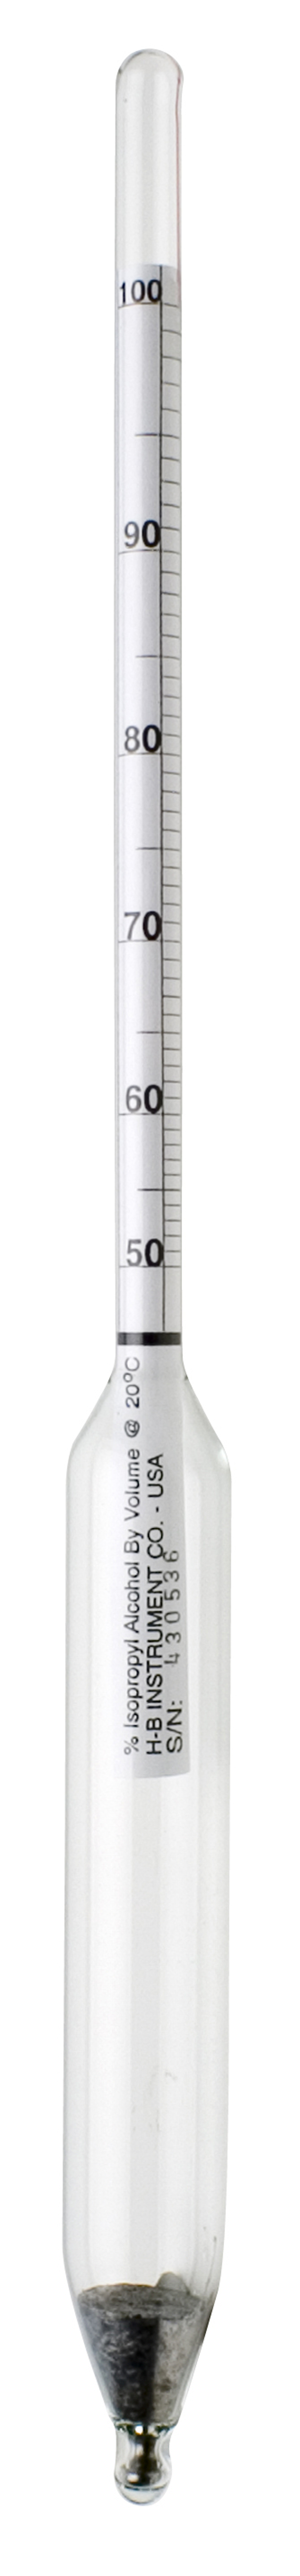 H-B Instrument B61809-4100 DURAC 50/100 Percent Isopropyl Alcohol Hydrometer